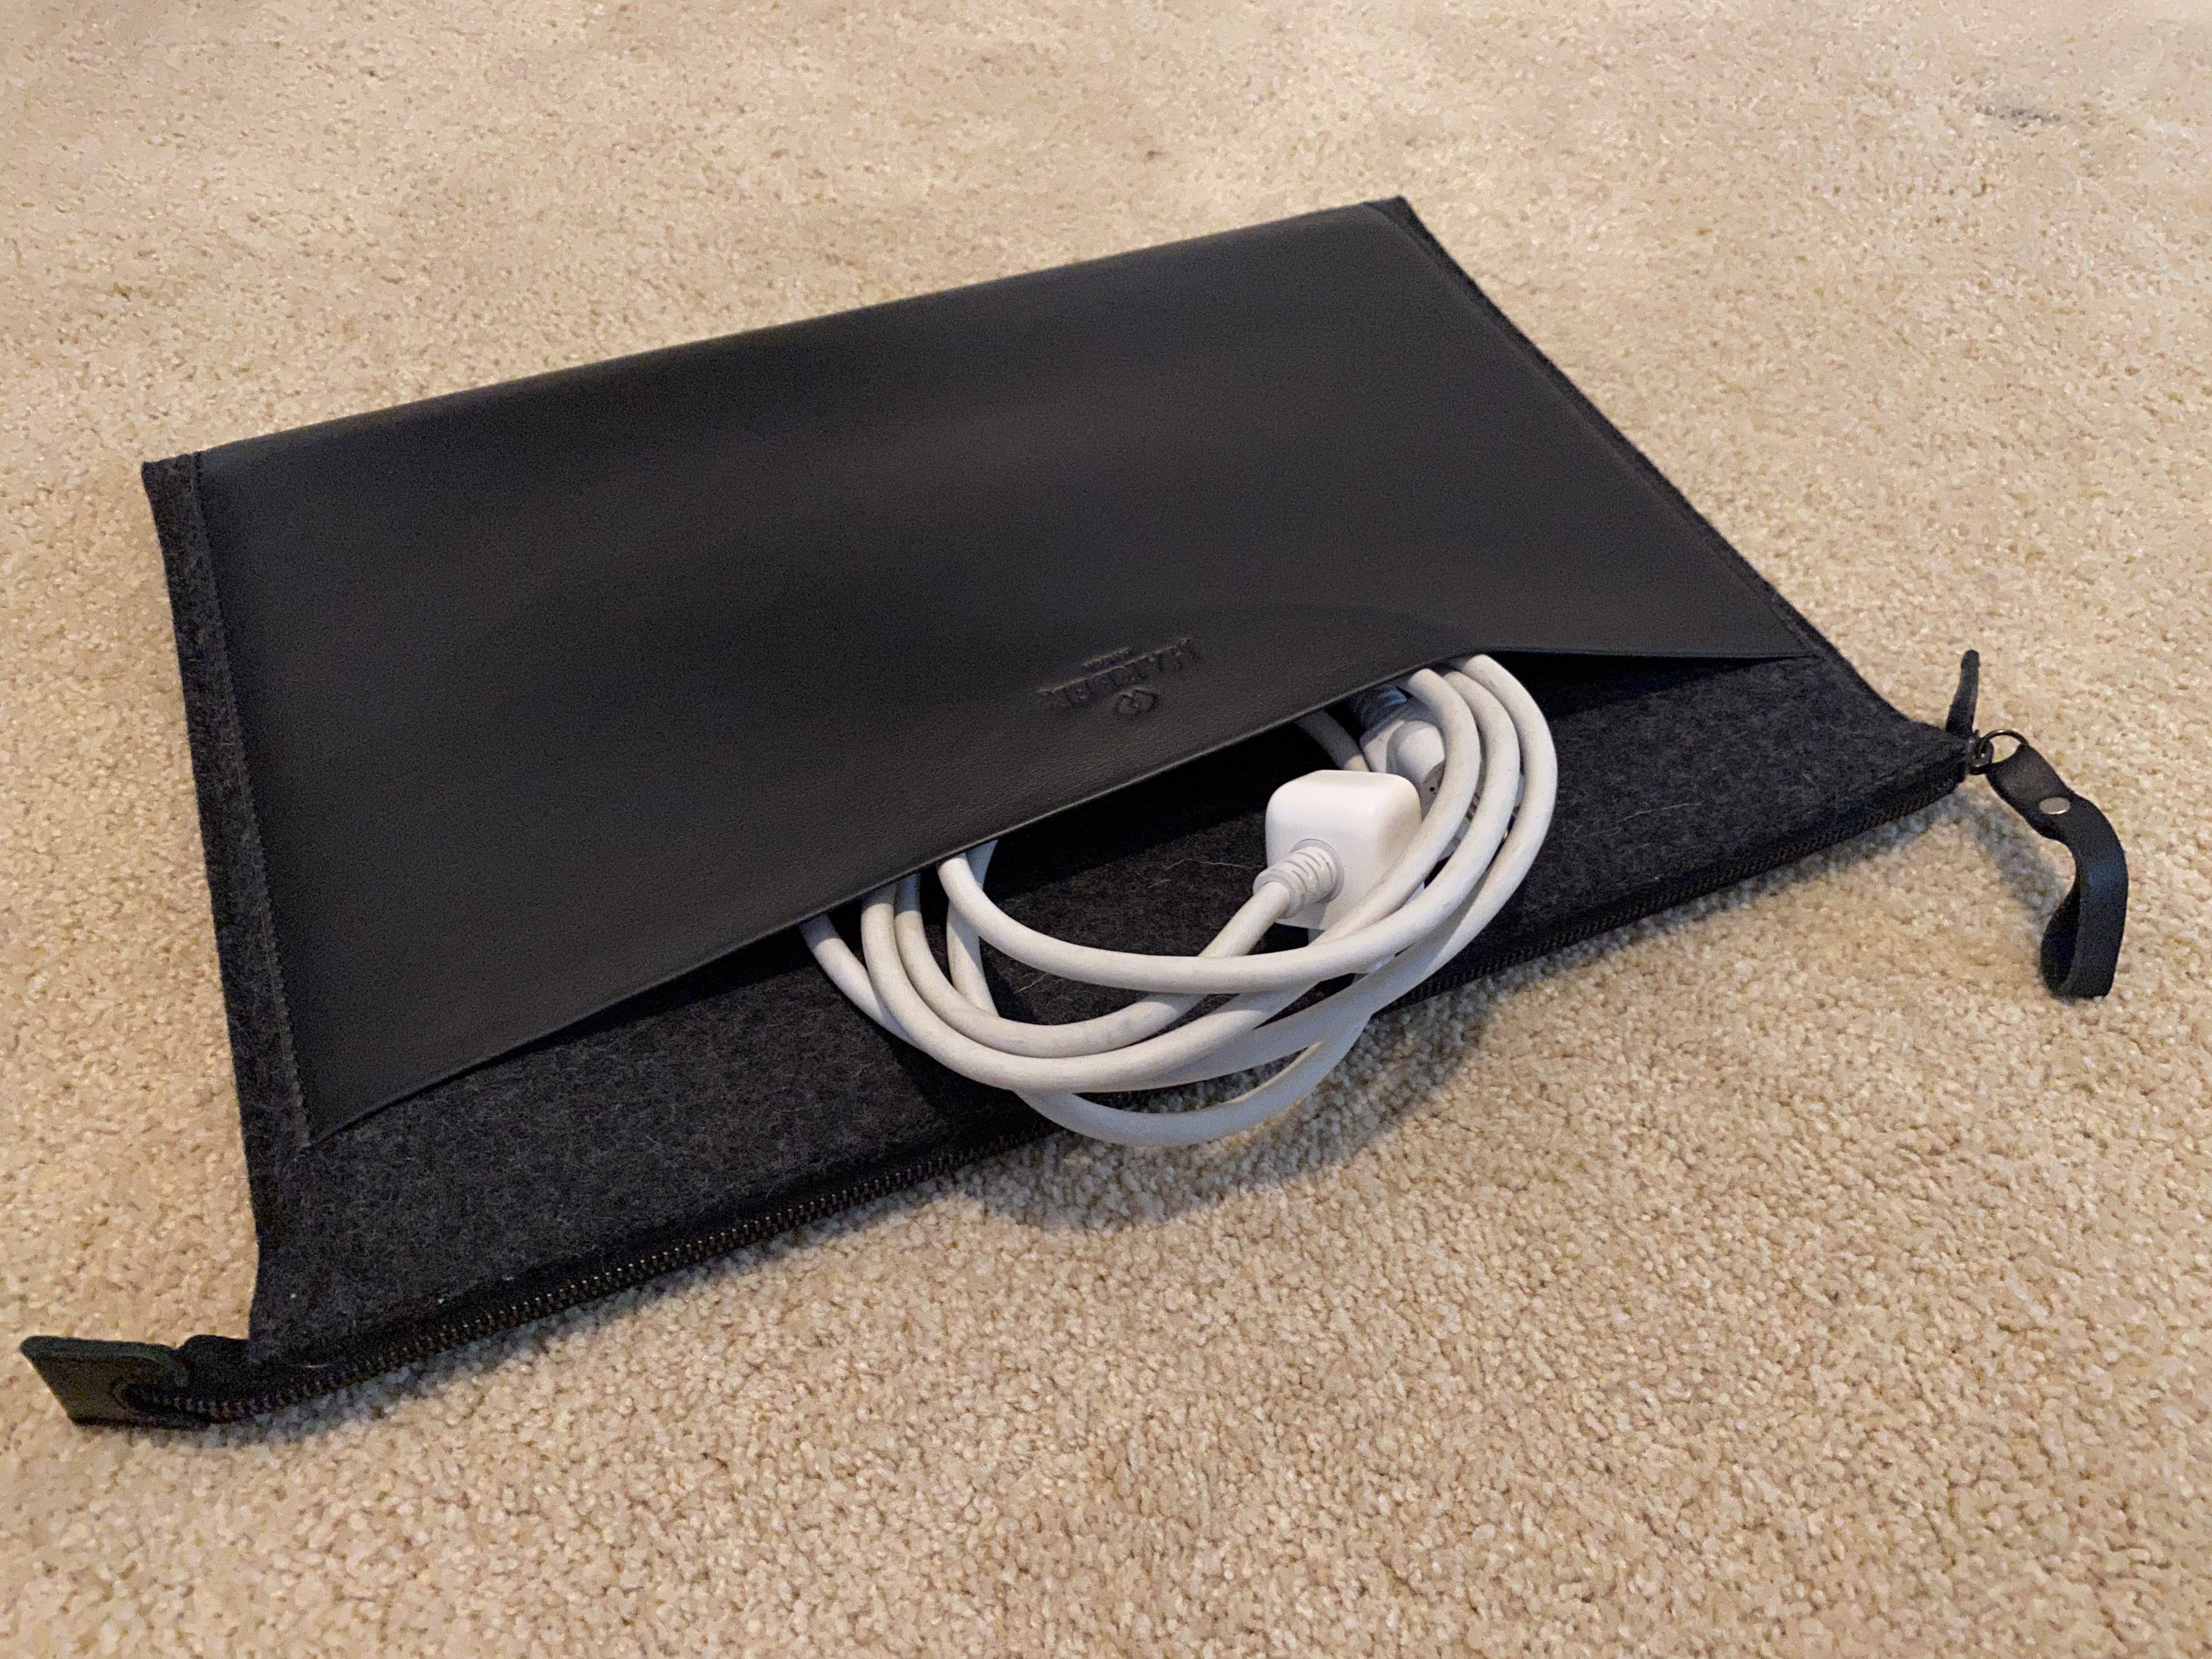 Review: Harber London Folio MacBook Leather & Felt Sleeve | MacPrices.net